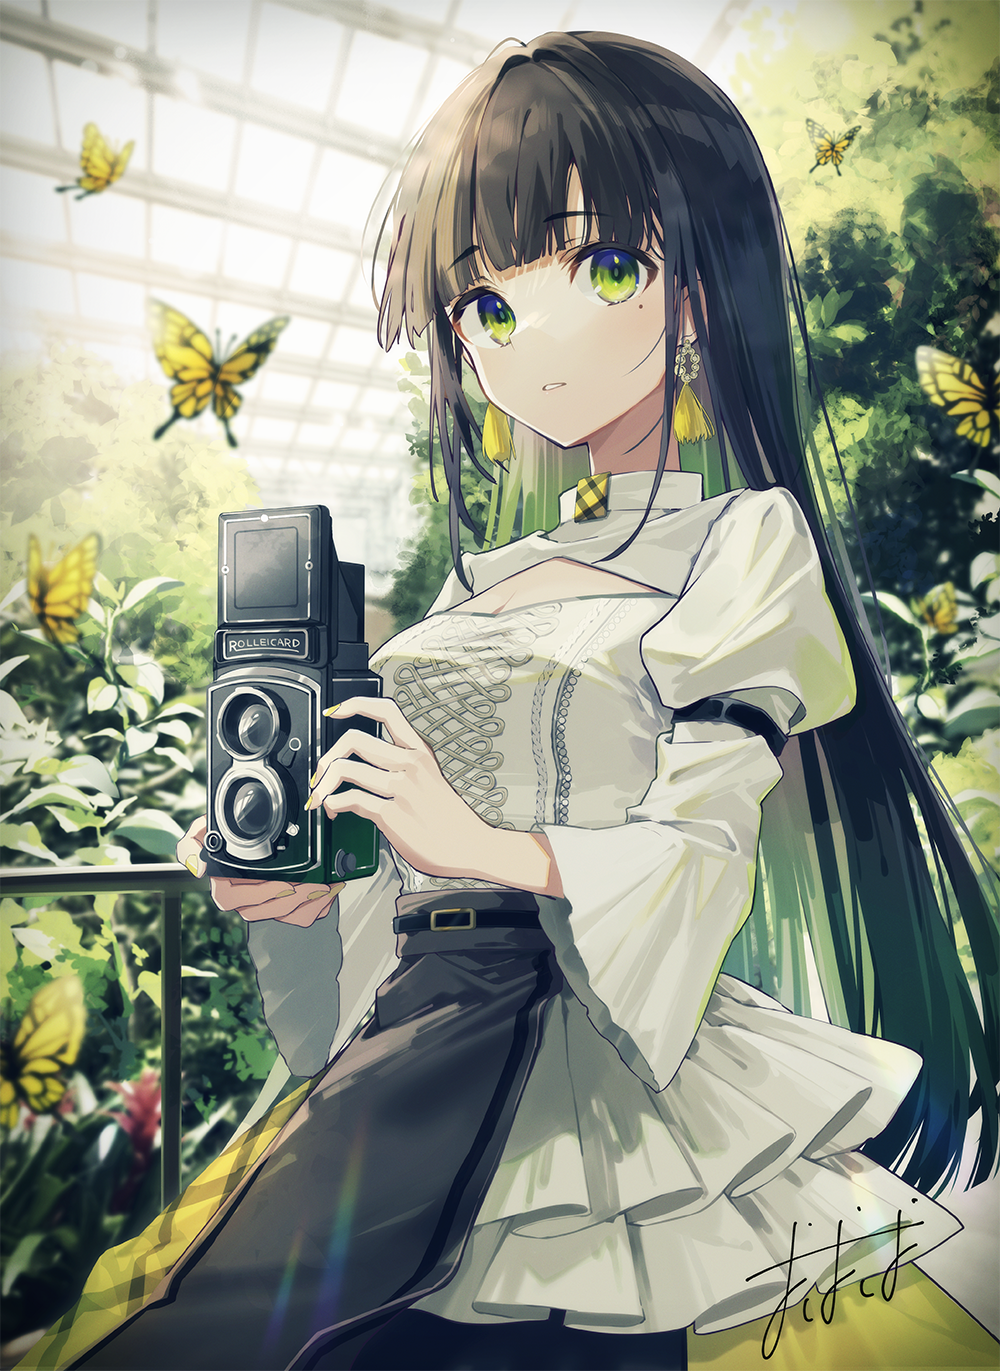 Download wallpaper 950x1534 green hair cute anime girl original iphone  950x1534 hd background 5741